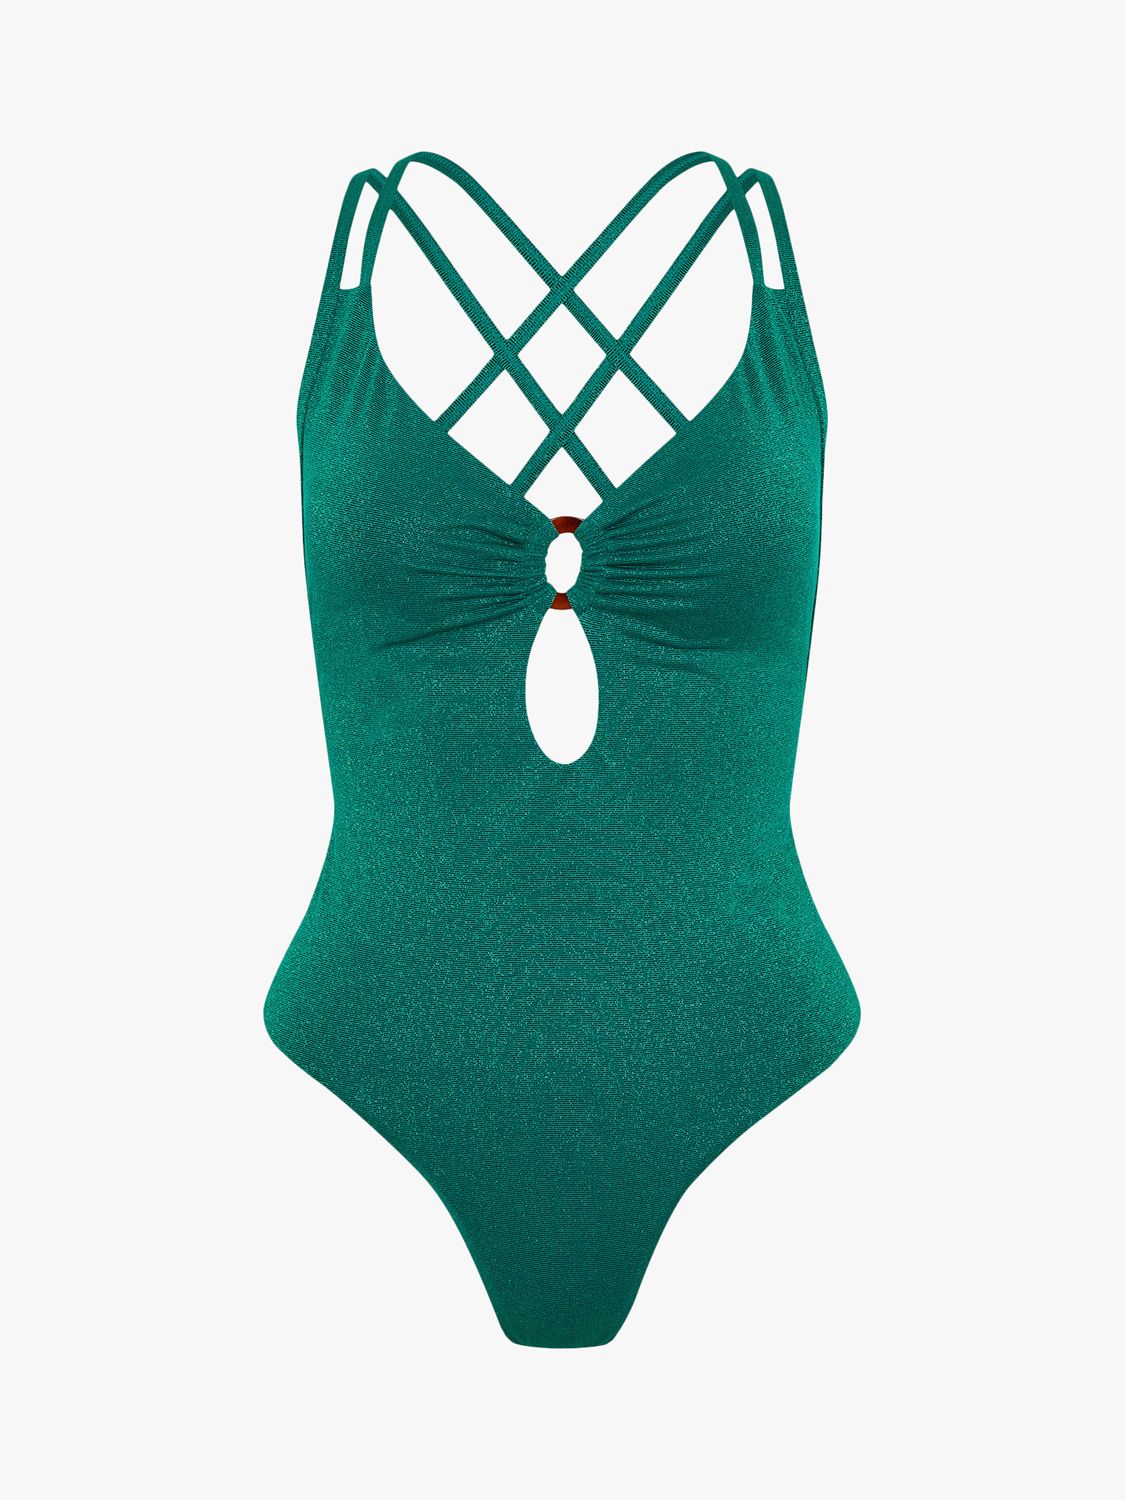 Accessorize Cross Back Shimmer Swimsuit, Green, 6